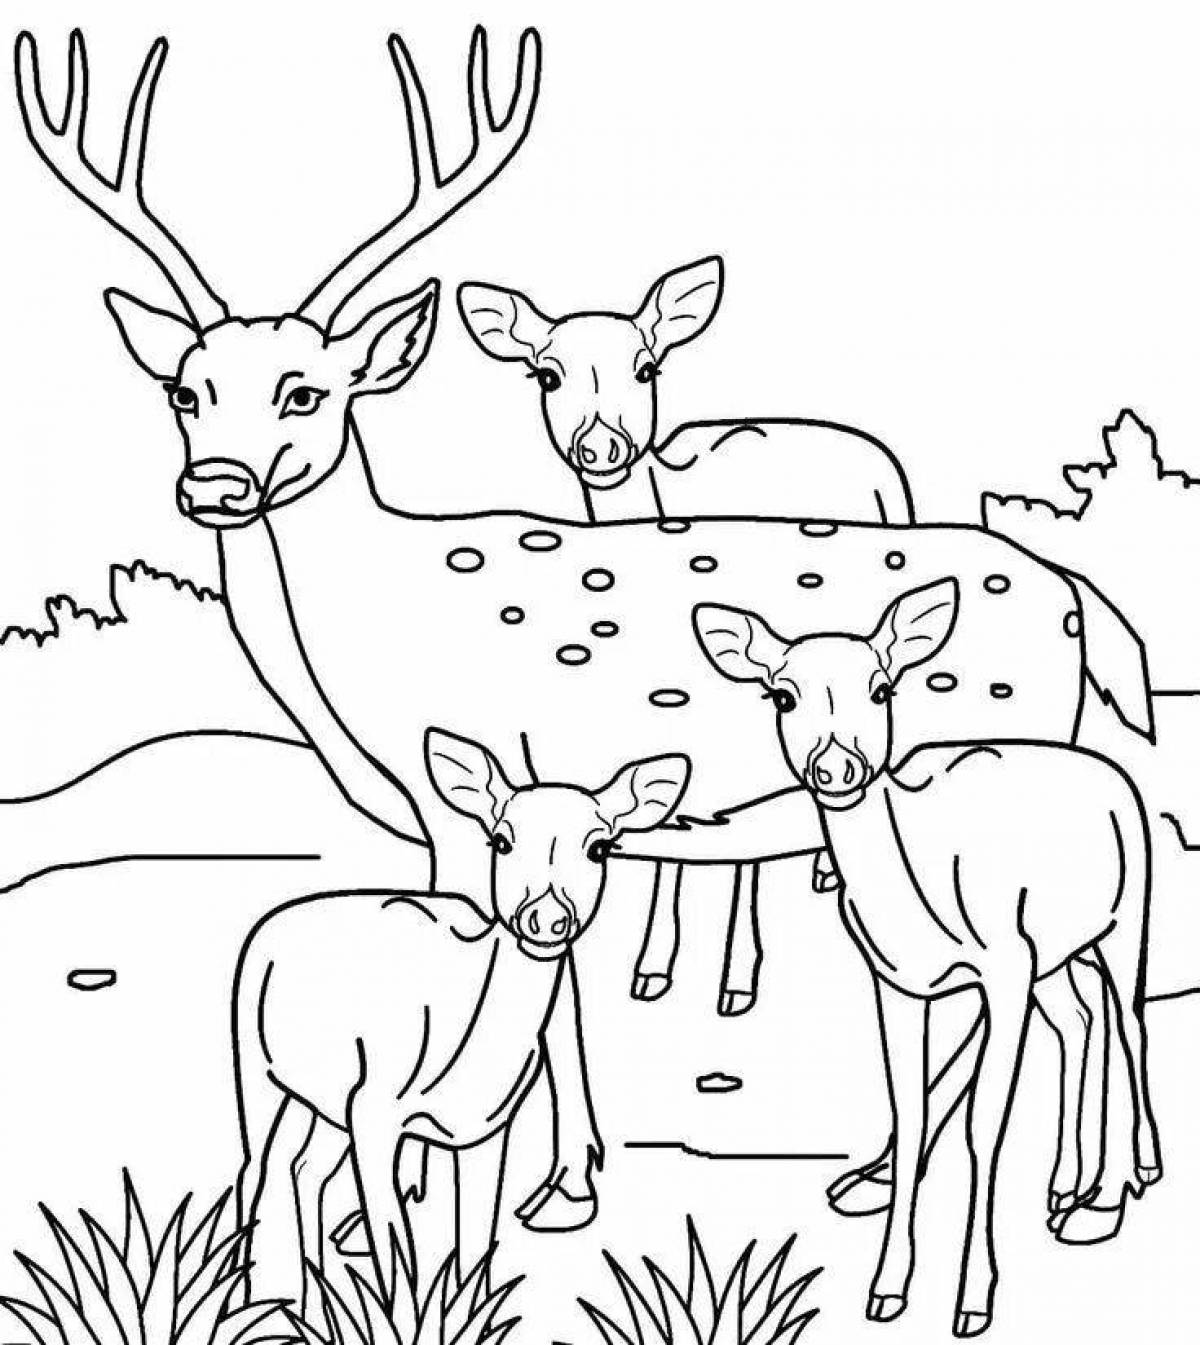 Coloring live sika deer